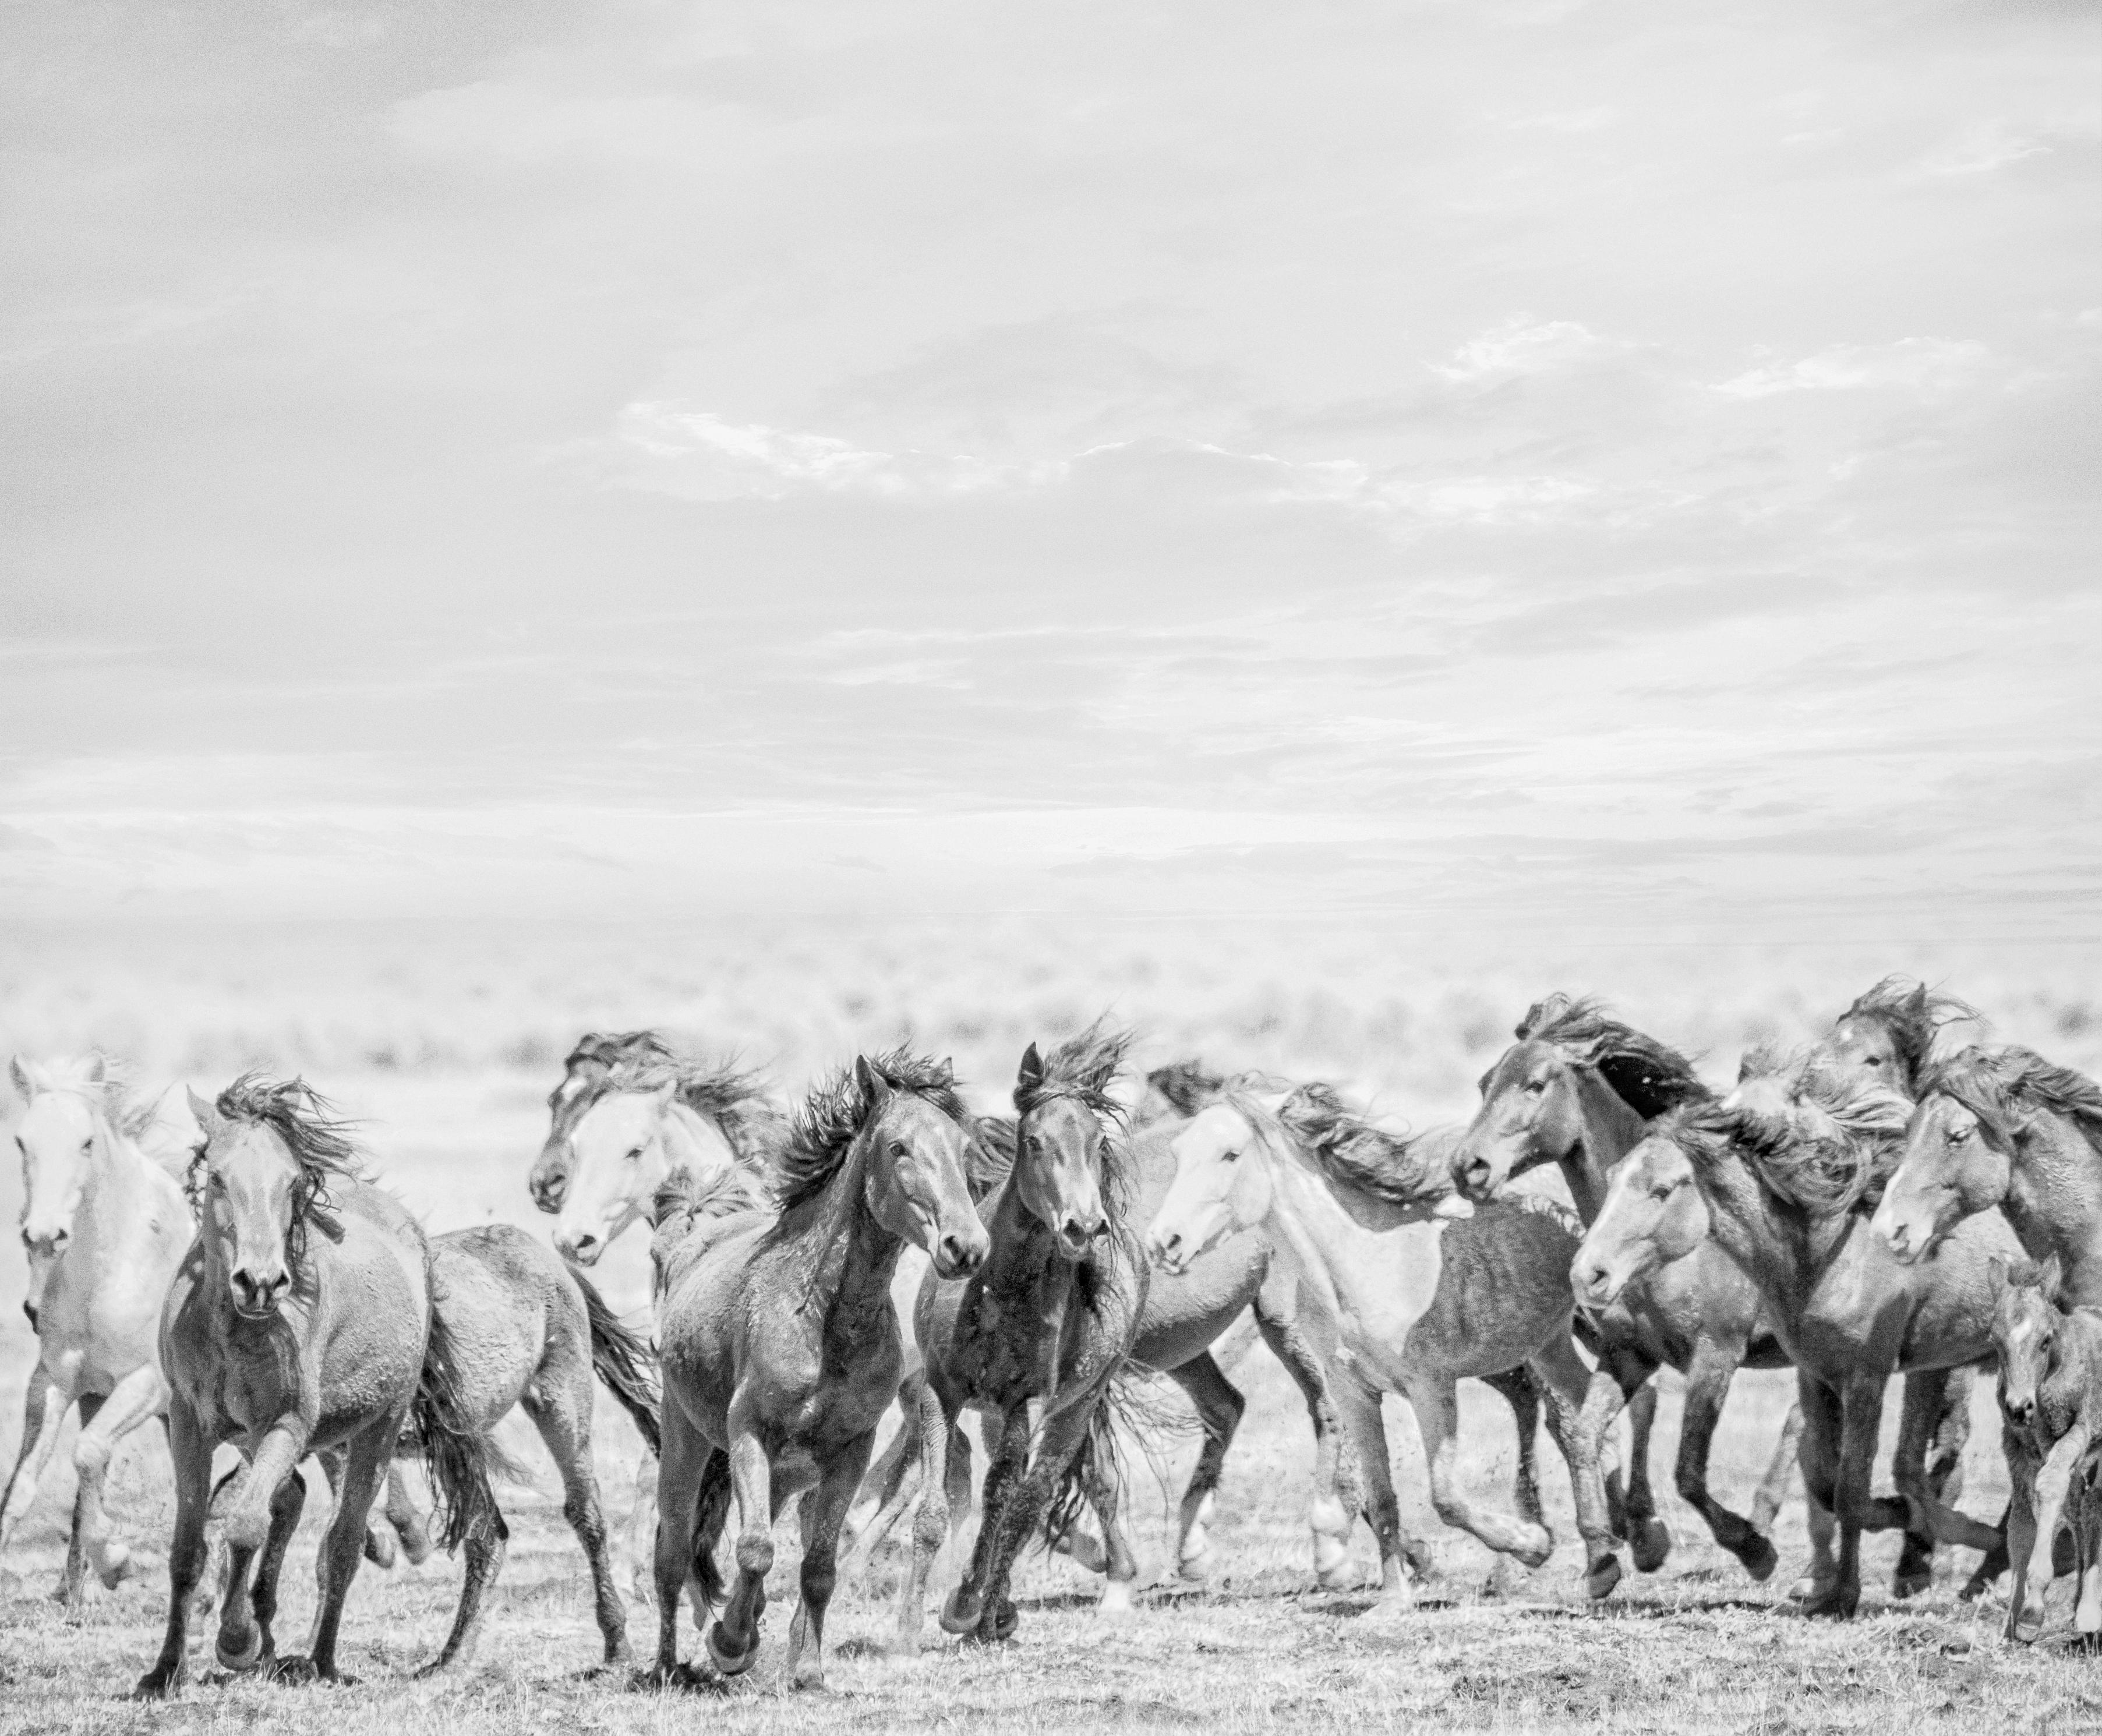 Black and White Photograph Shane Russeck - "Go West"  50x60 - Photographie noir et blanc Chevaux sauvages  Photographier les Mustangs